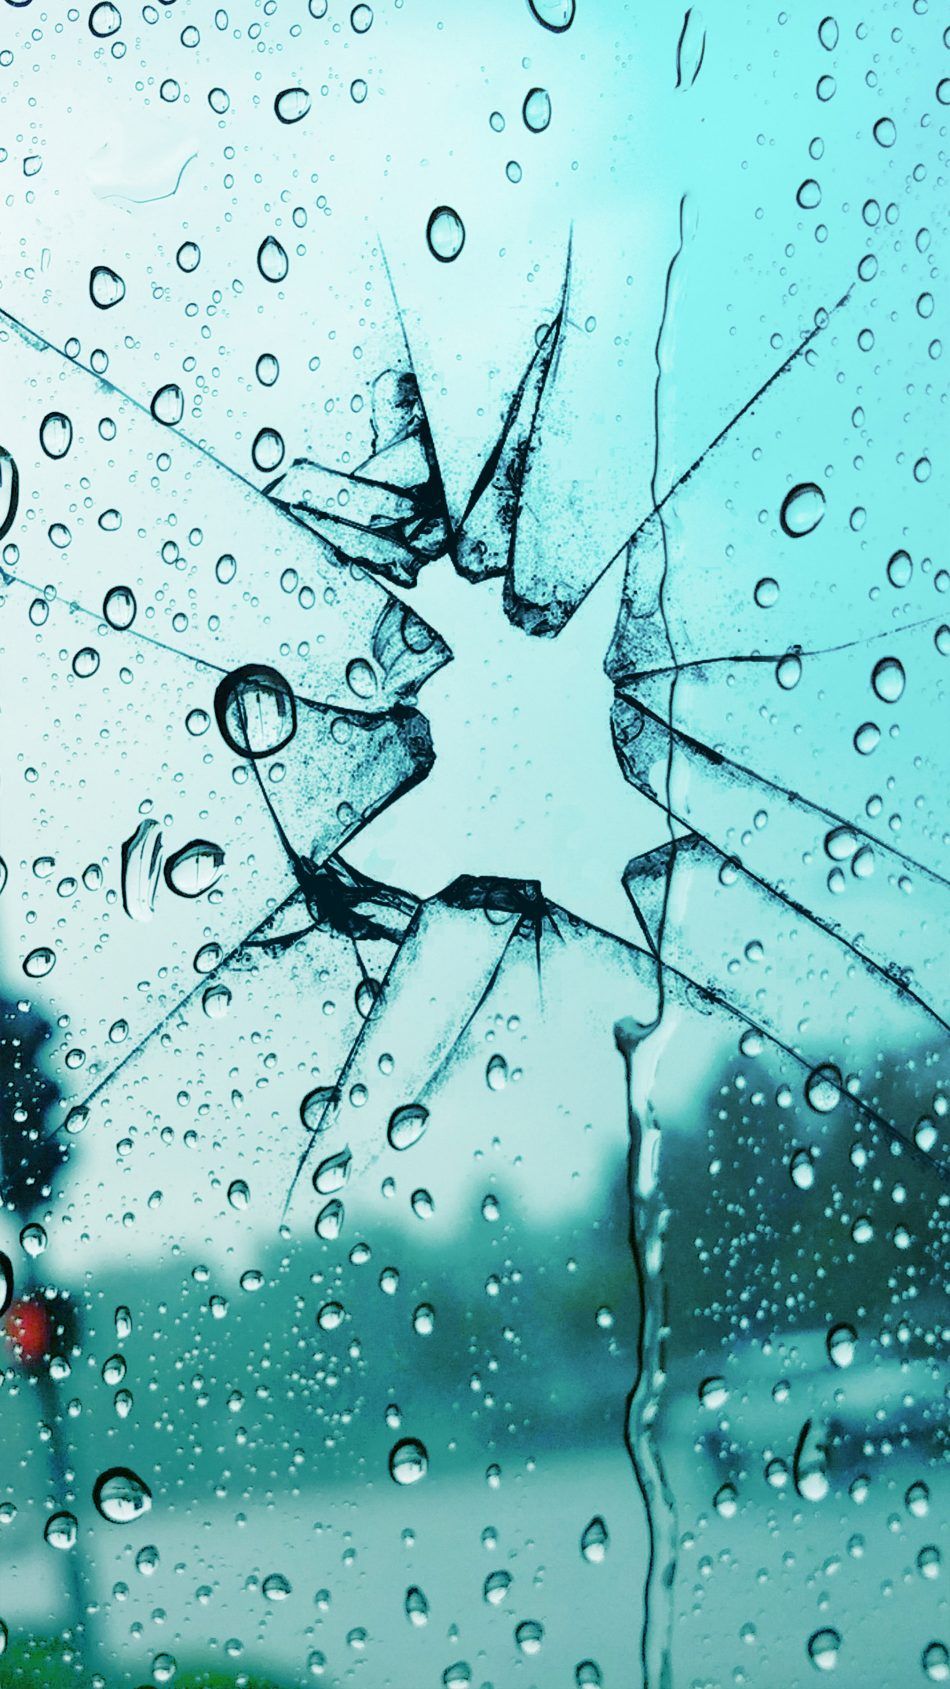 Free download Broken Glass Rain Drops 4K Ultra HD Mobile Wallpaper